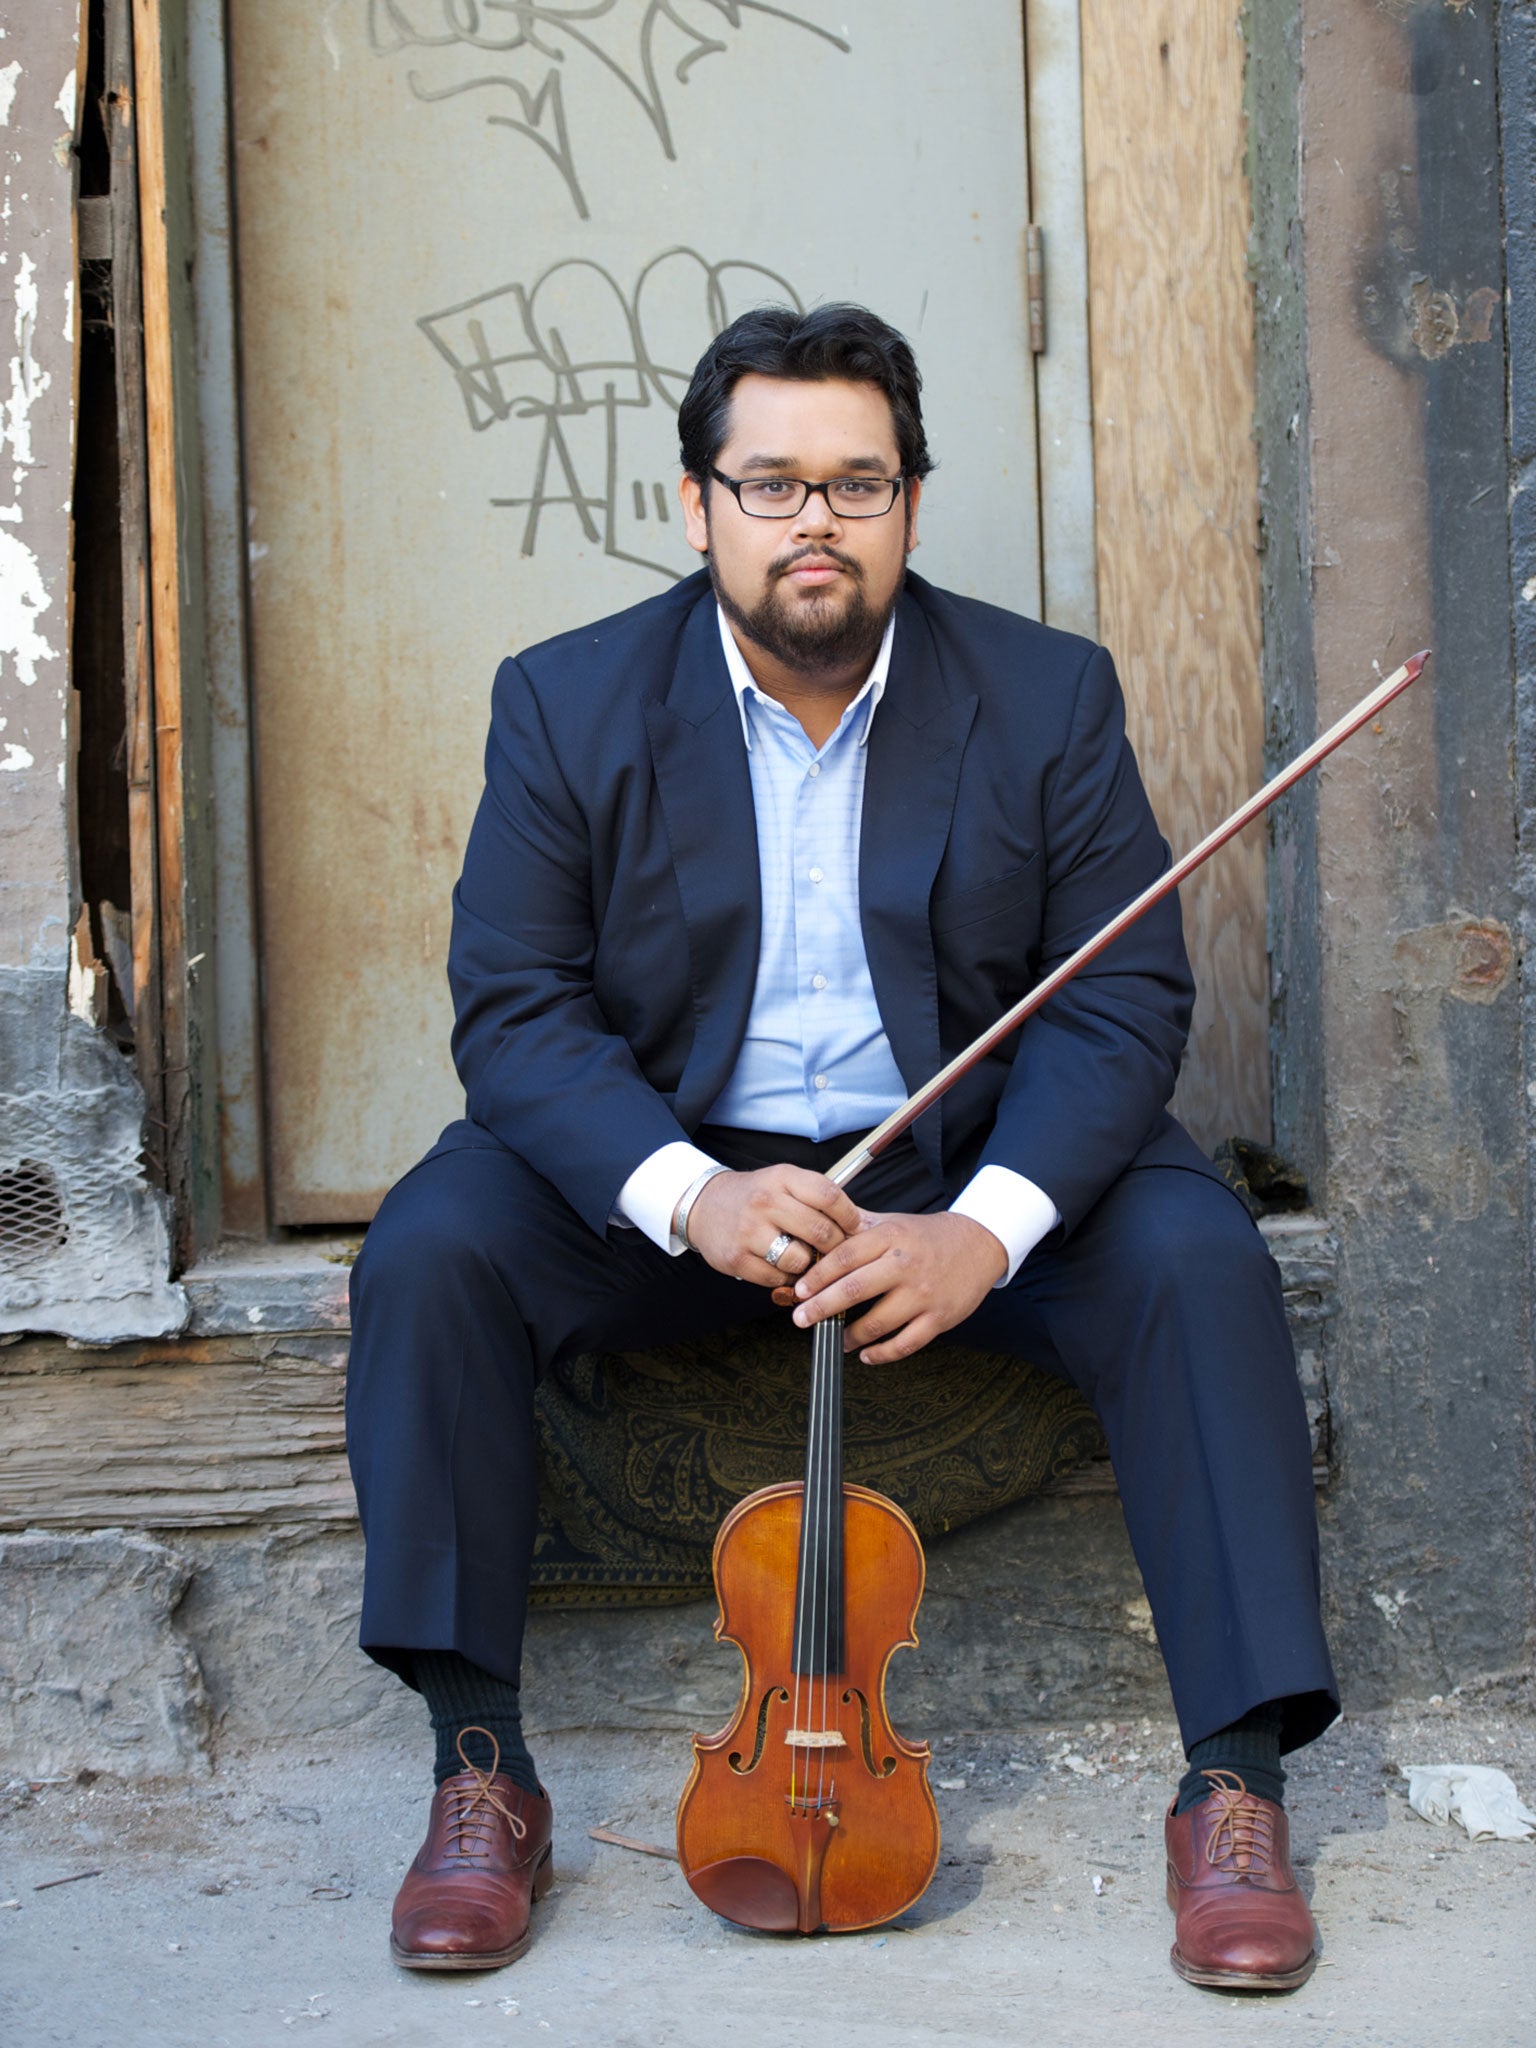 Vijay Gupta, acclaimed violinist for the Los Angeles Philharmonic